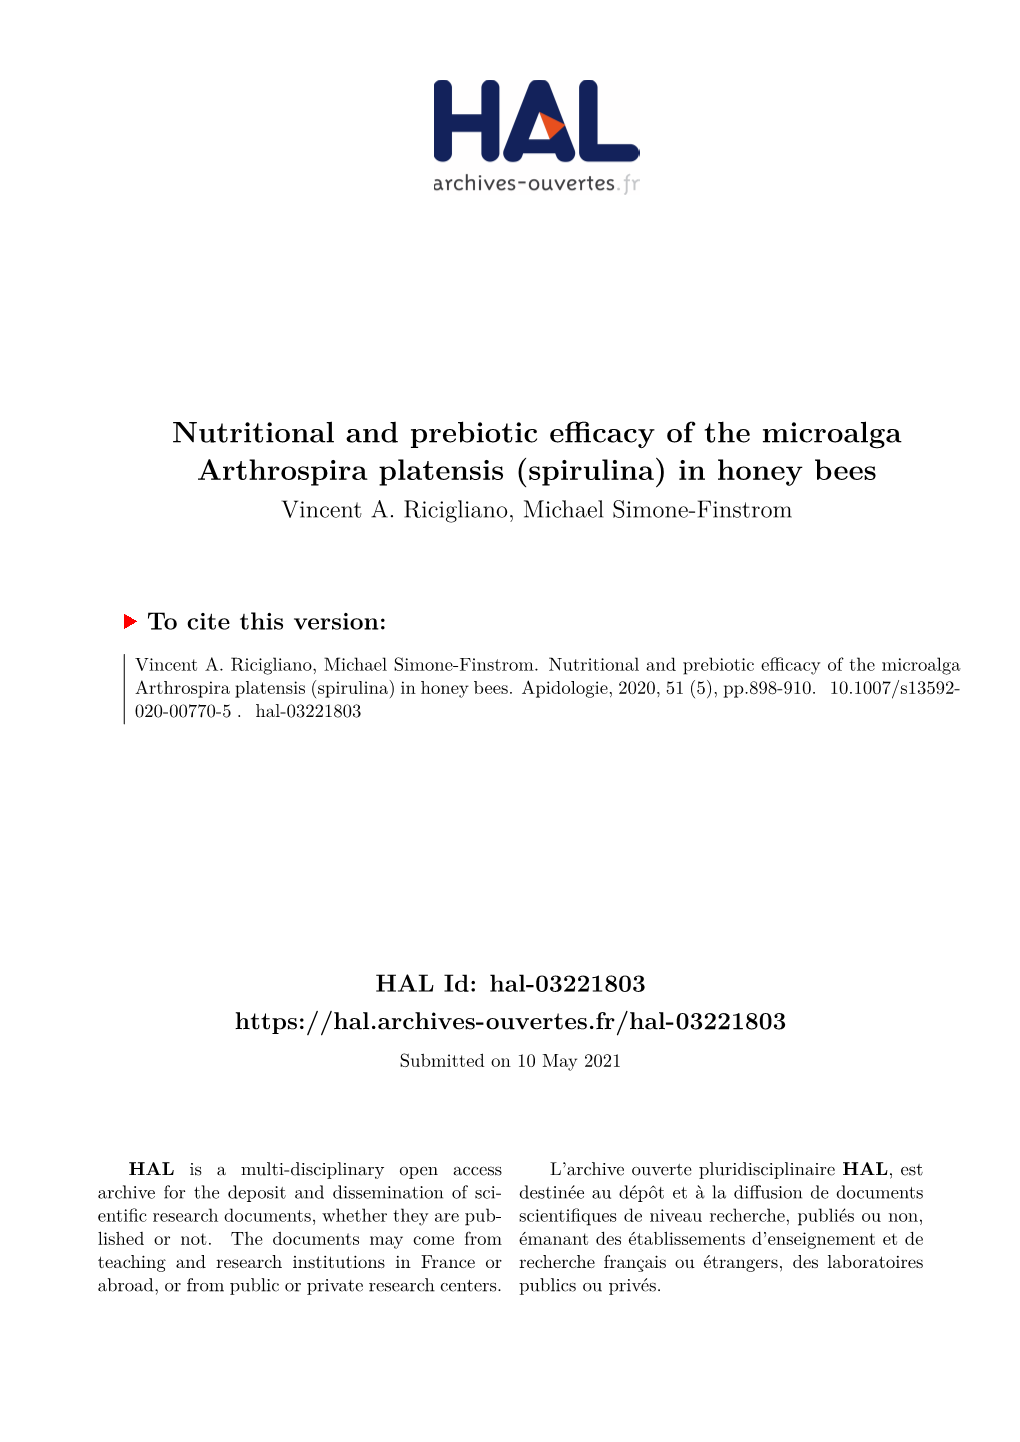 Nutritional and Prebiotic Efficacy of the Microalga Arthrospira Platensis (Spirulina) in Honey Bees